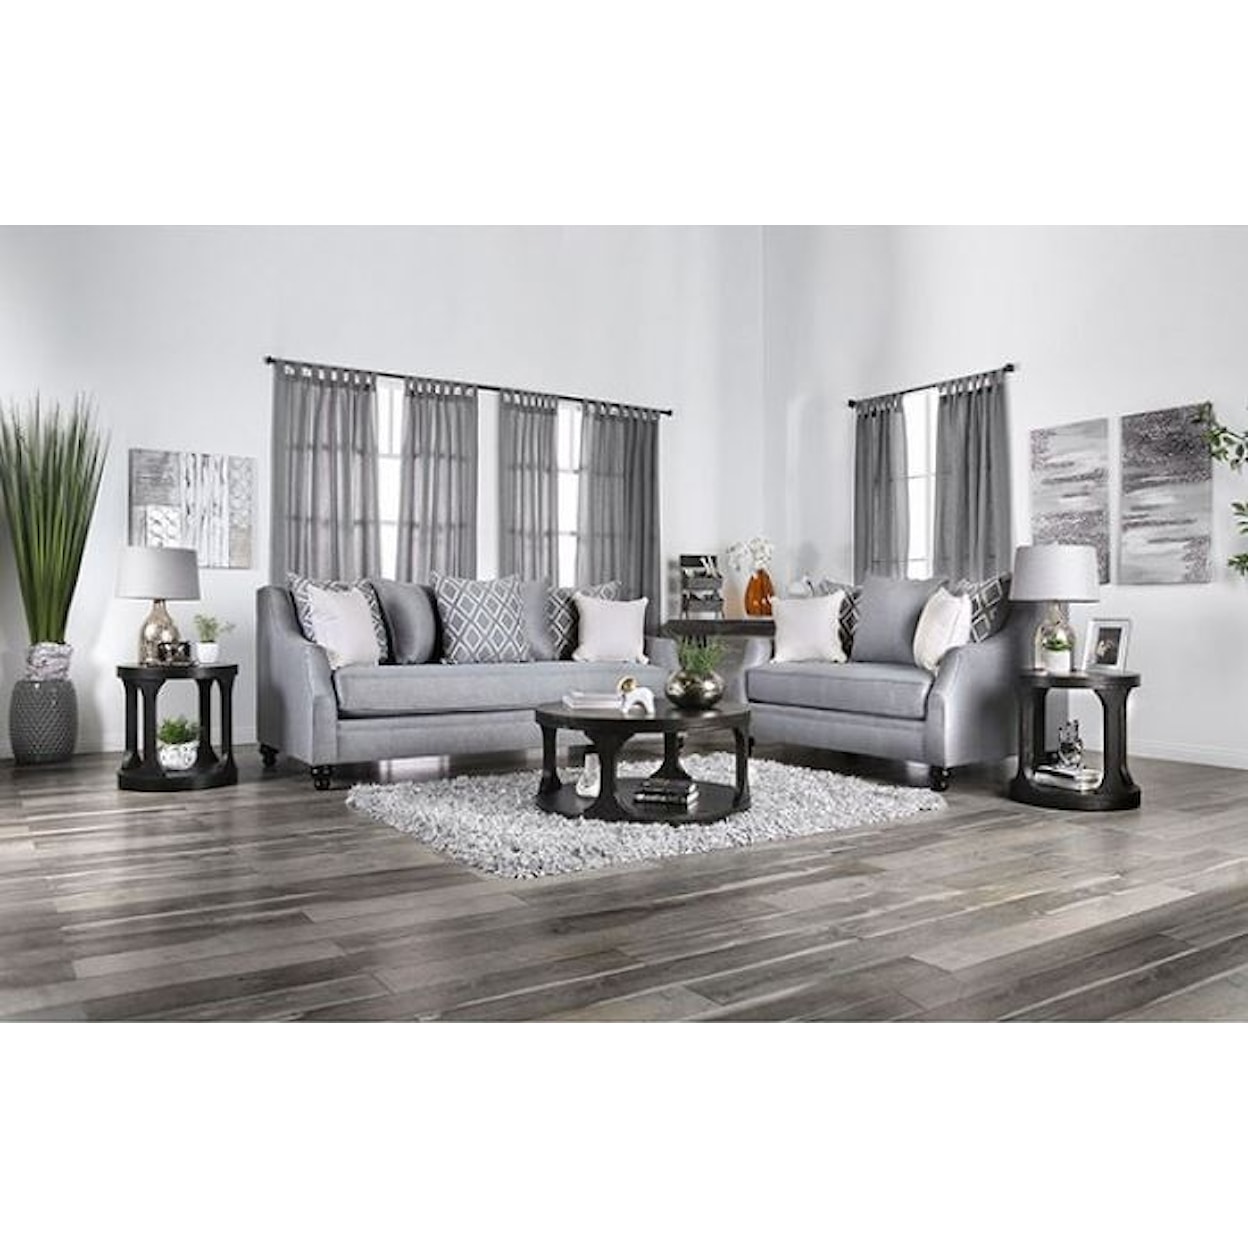 Furniture of America Nefyn Sofa